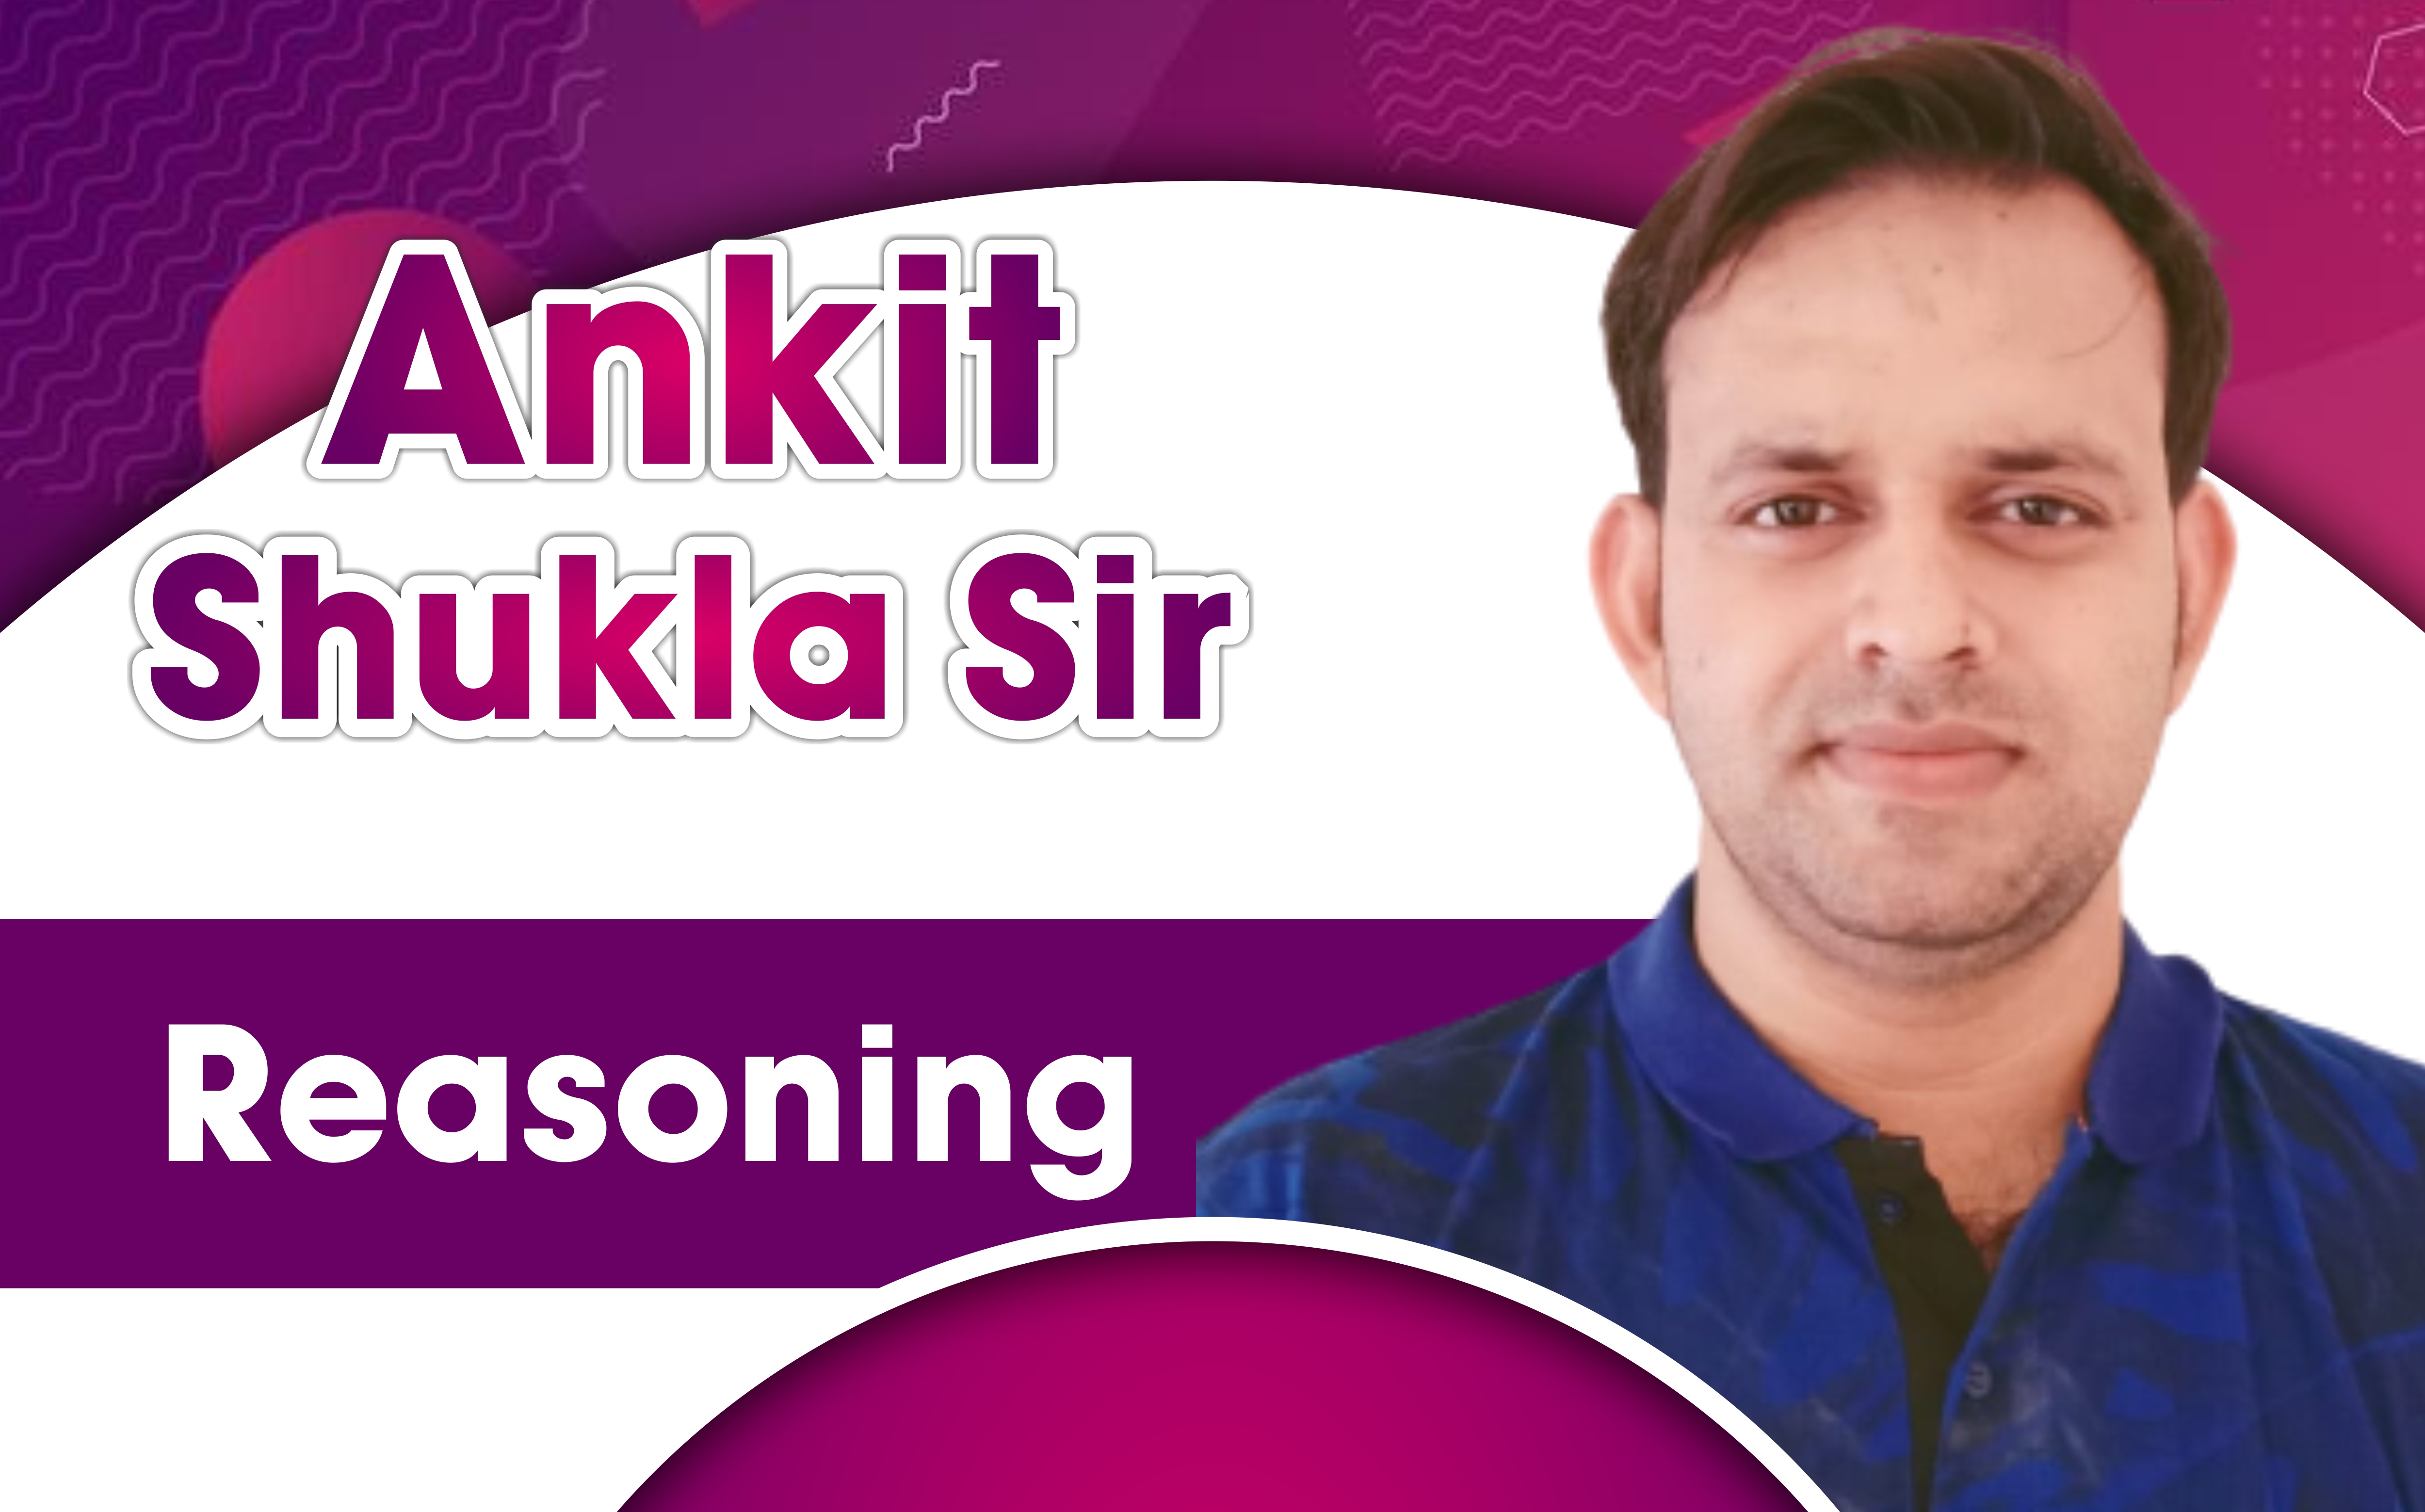 Prof. Ankit Shukla Sir